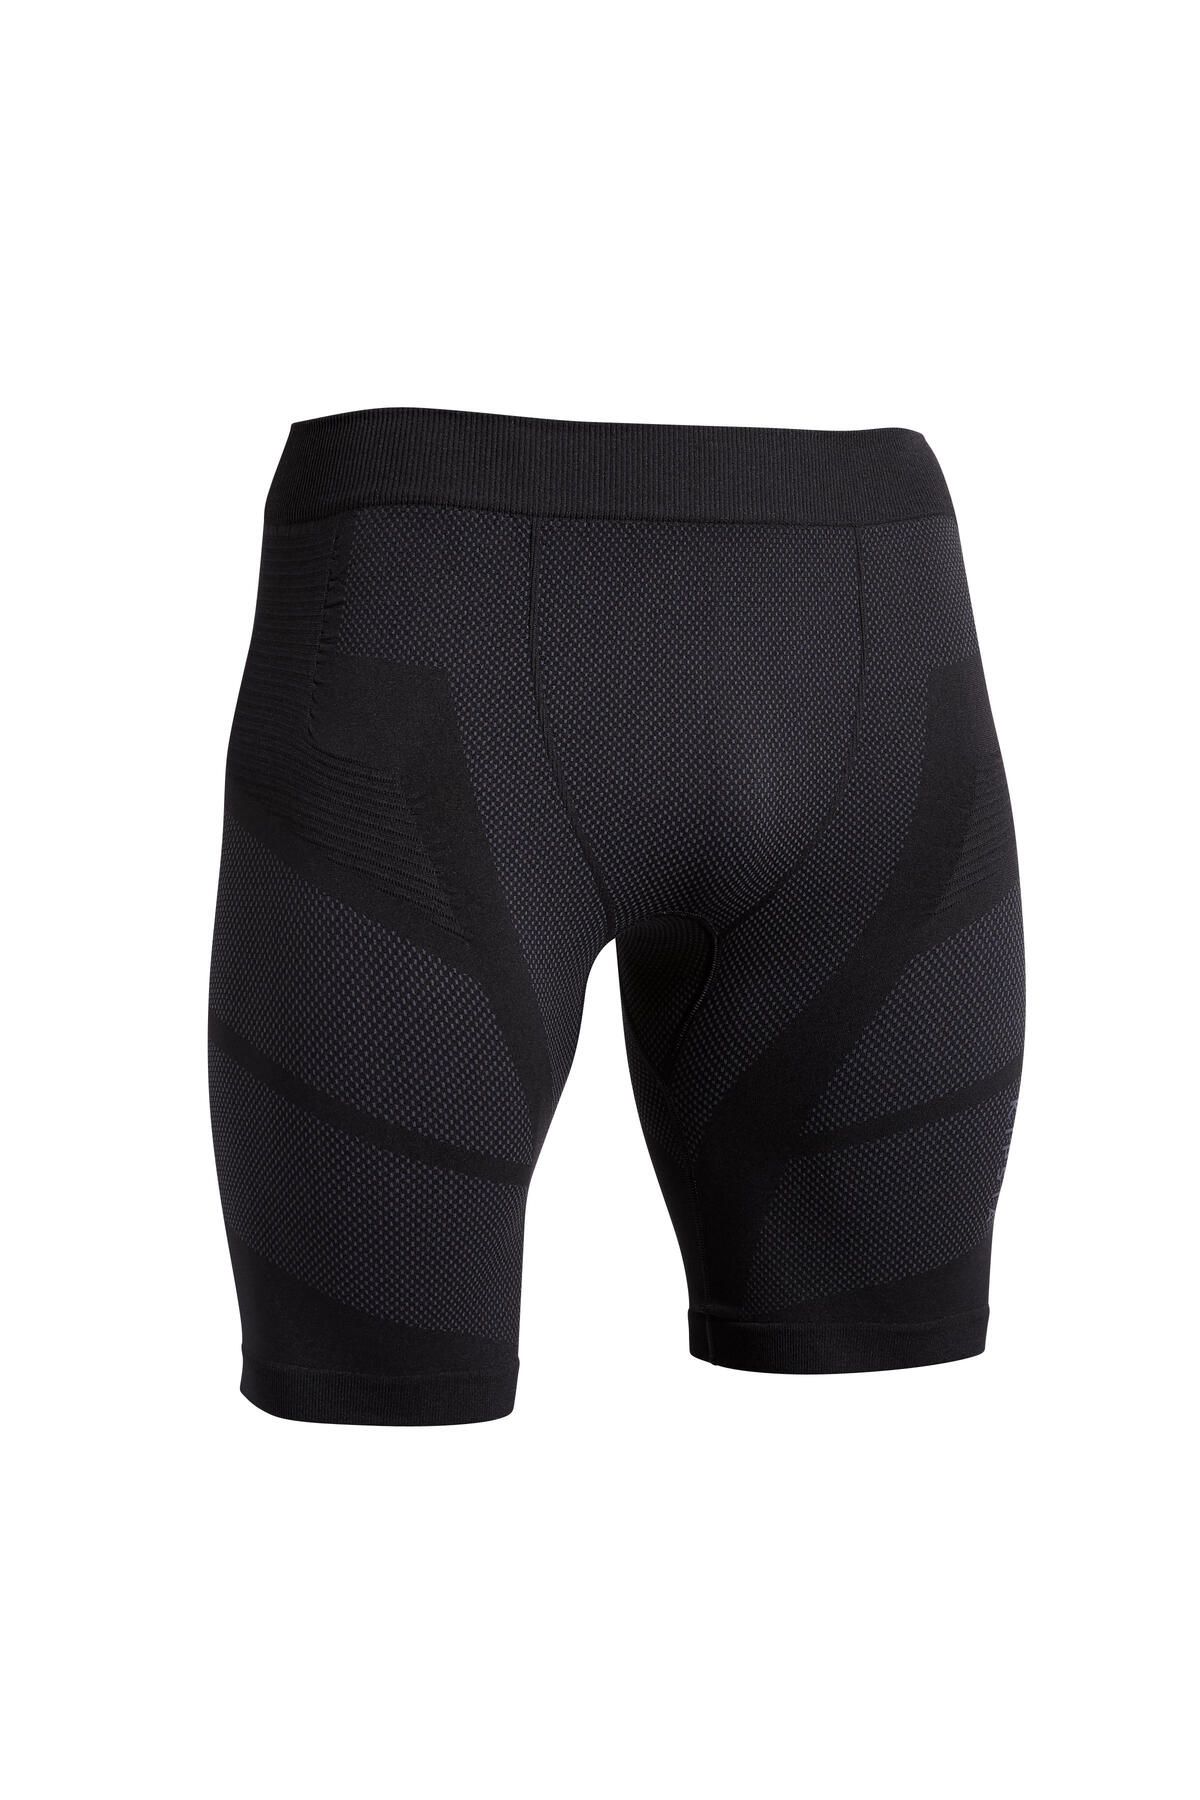 Decathlon Kids Football Tights Underwear - Black - Keepdry 500